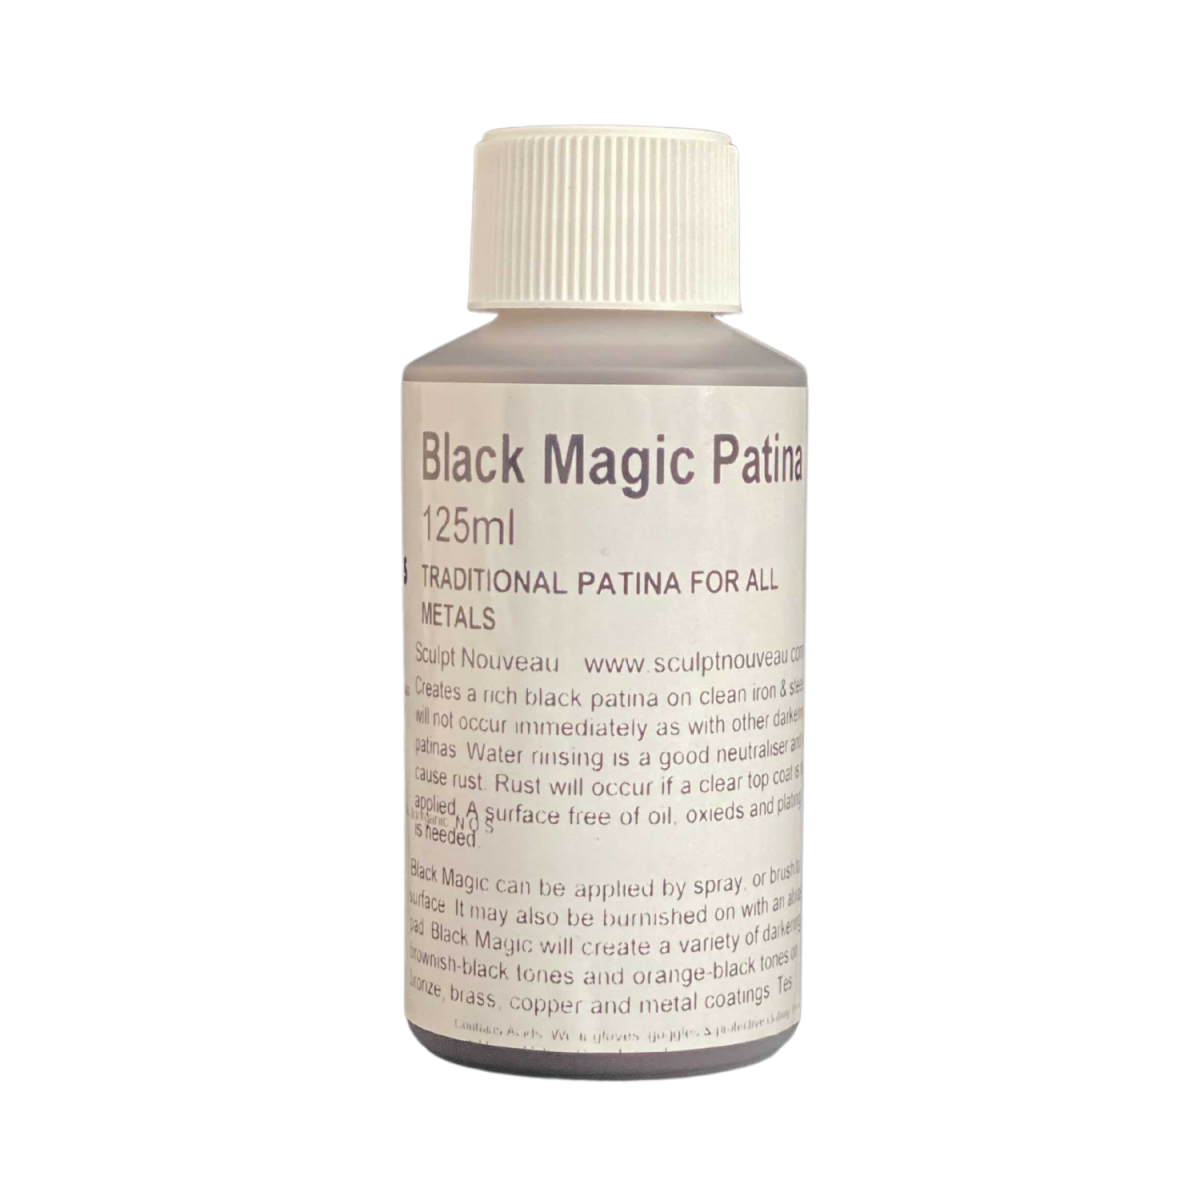 Black Magic Patina